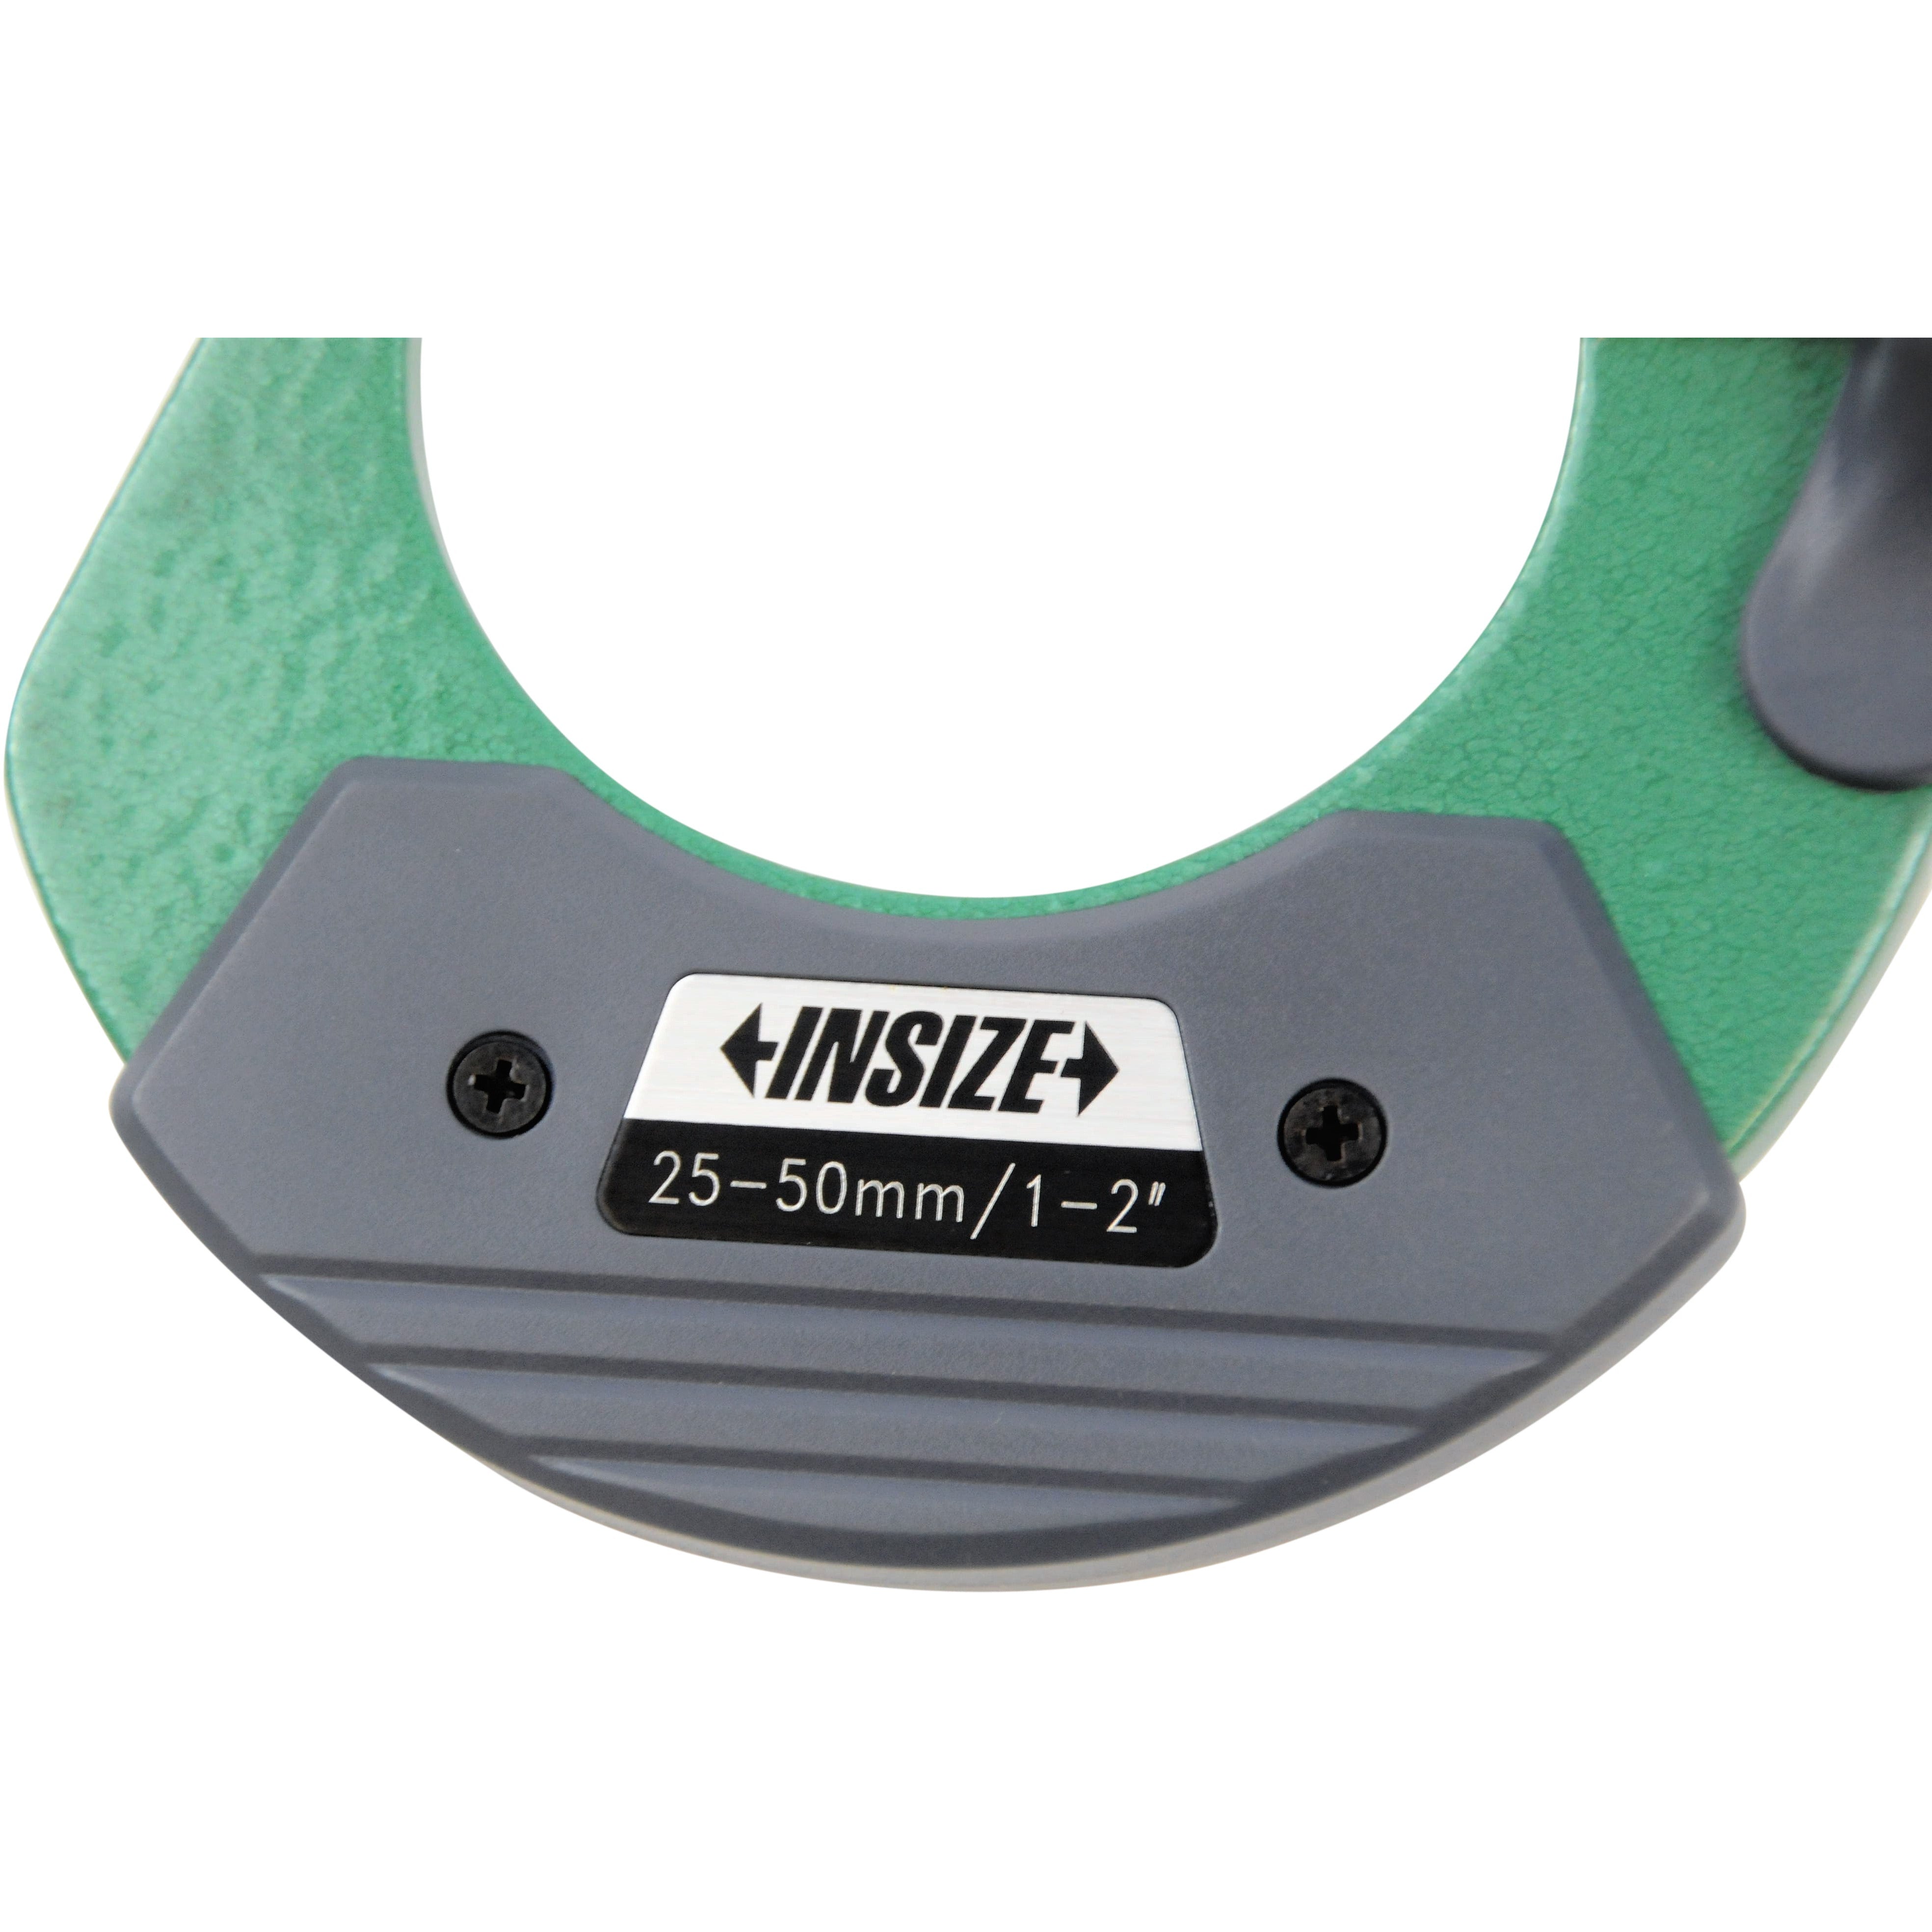 Insize Digital Outside Micrometer 25-50MM / 1-2" Range Series 3109-25A